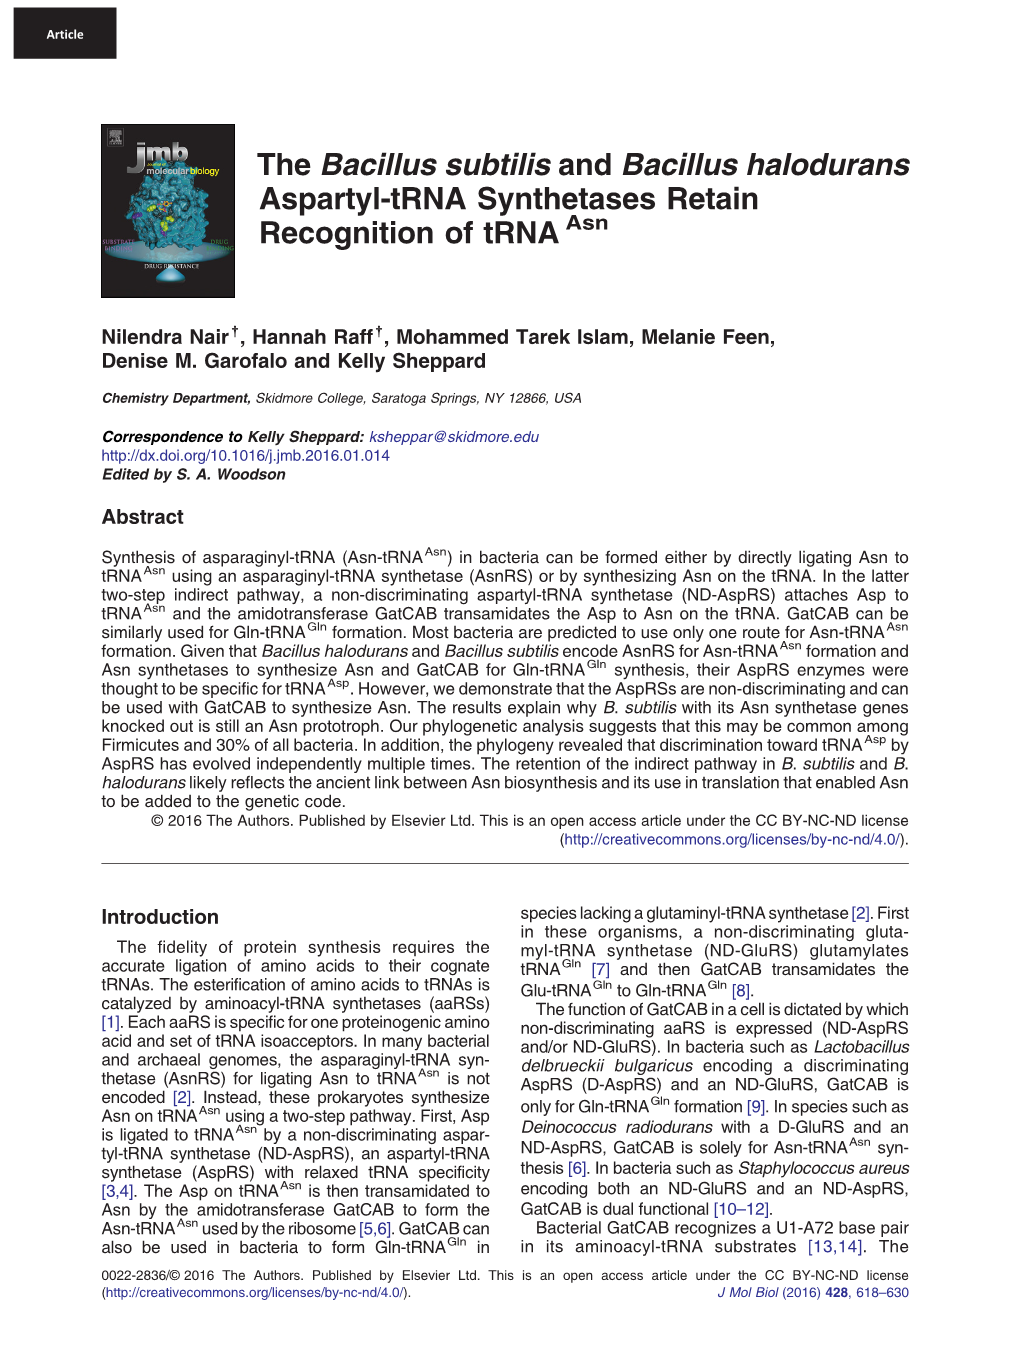 The Bacillus Subtilis and Bacillus Halodurans Aspartyl-Trna Synthetases Retain Recognition of Trna Asn